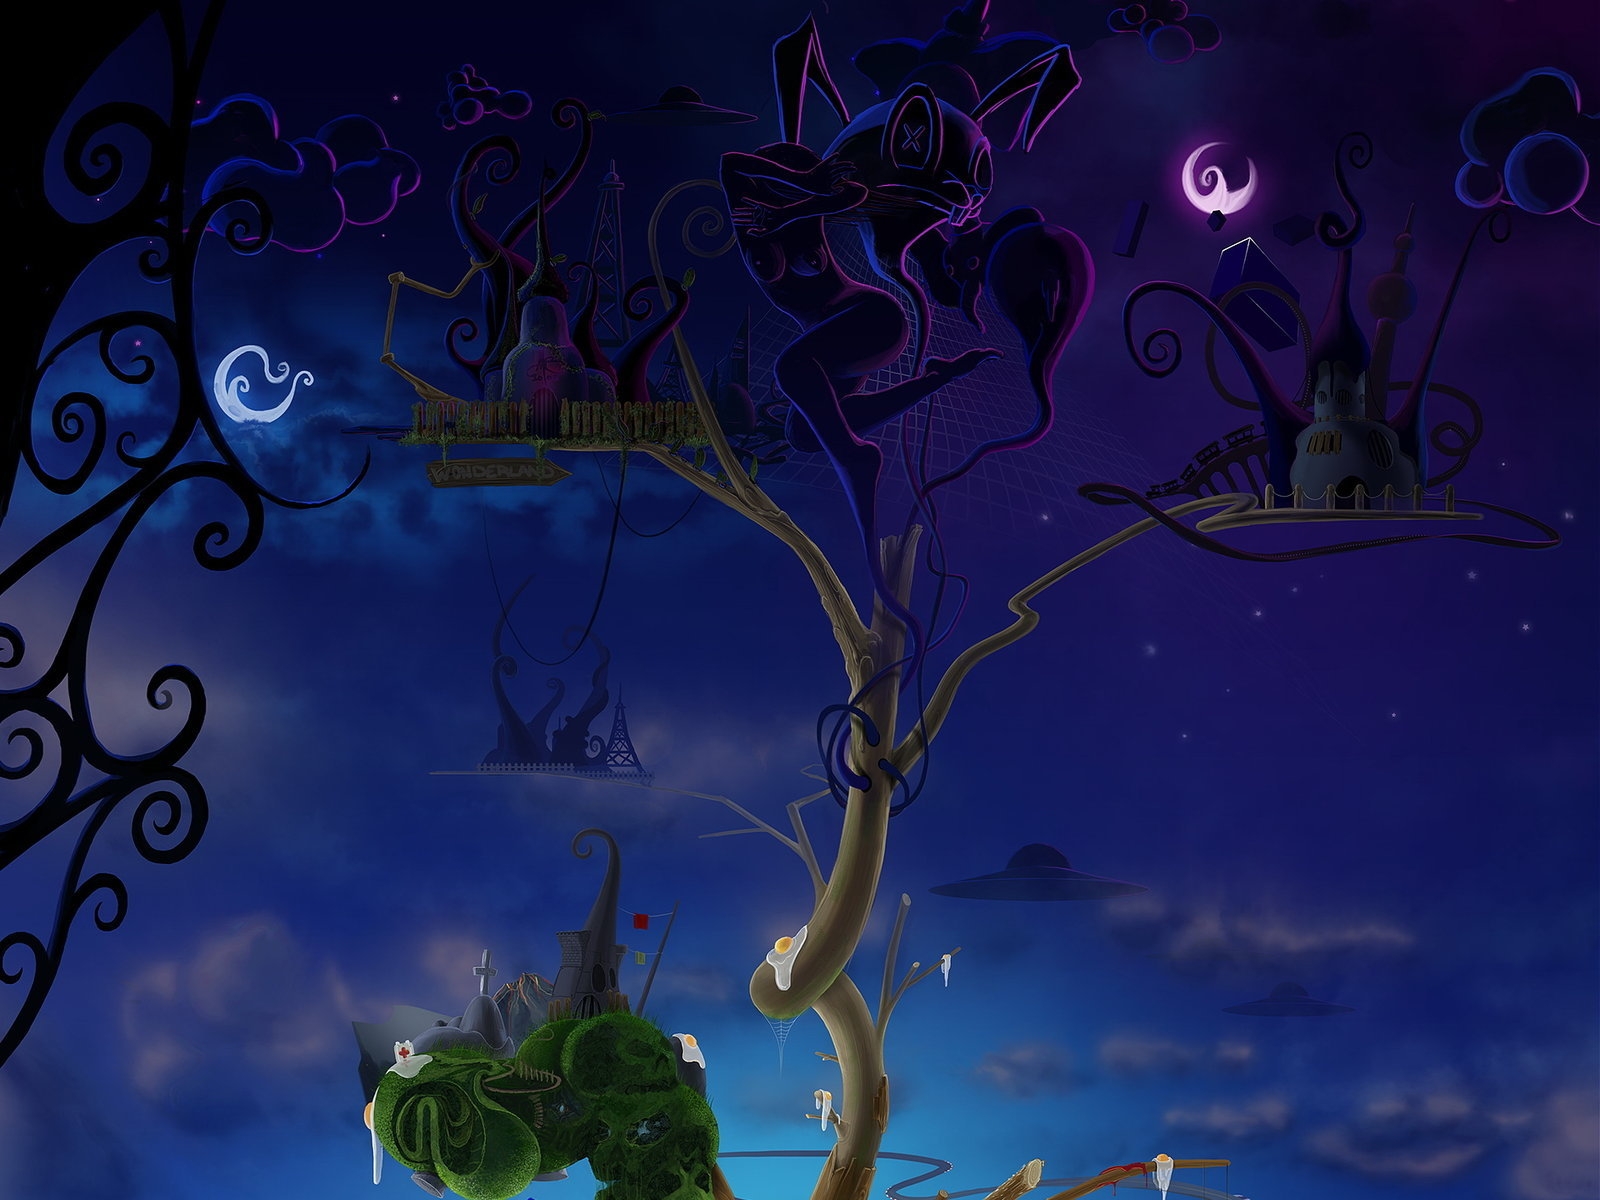 Night in Wonderland for 1600 x 1200 resolution